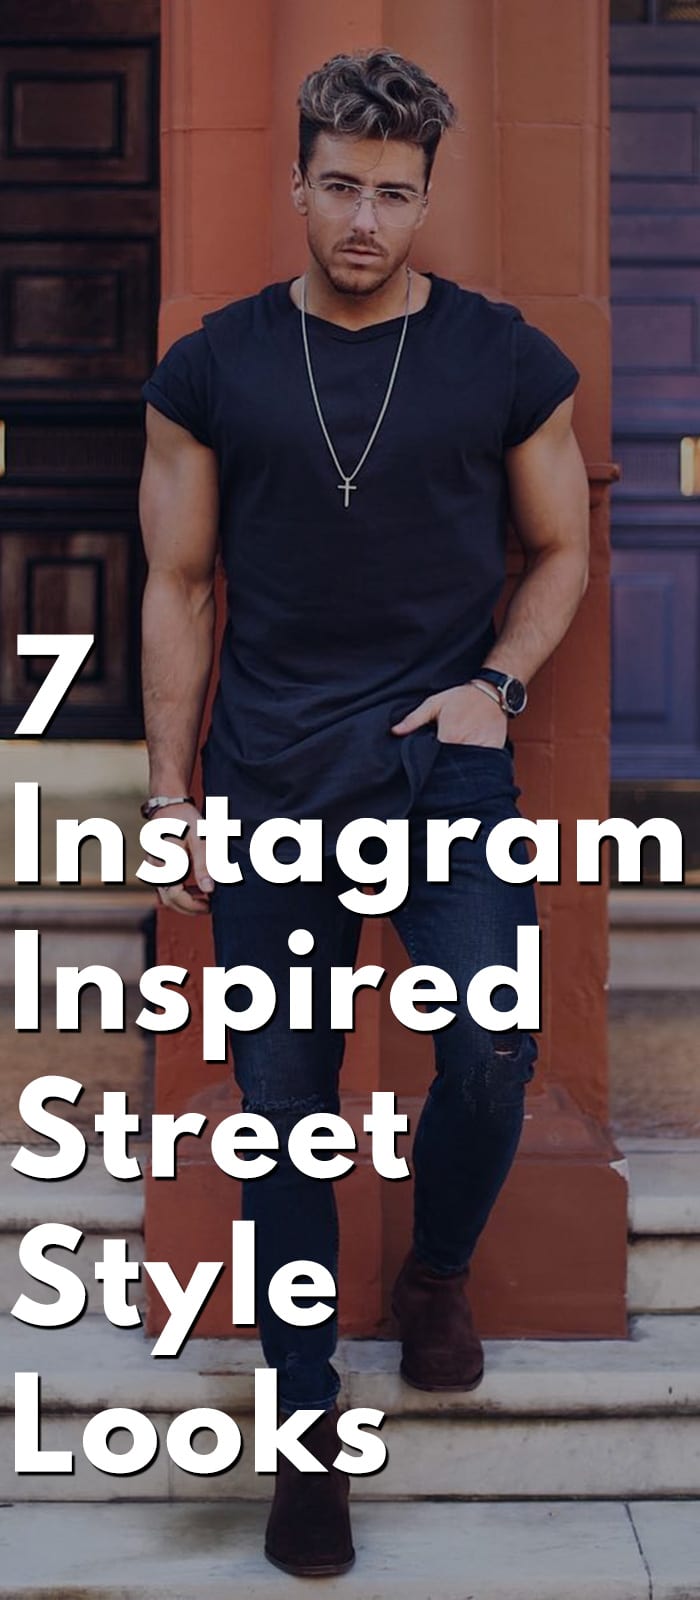 7 Instagram Inspired Street Style Looks